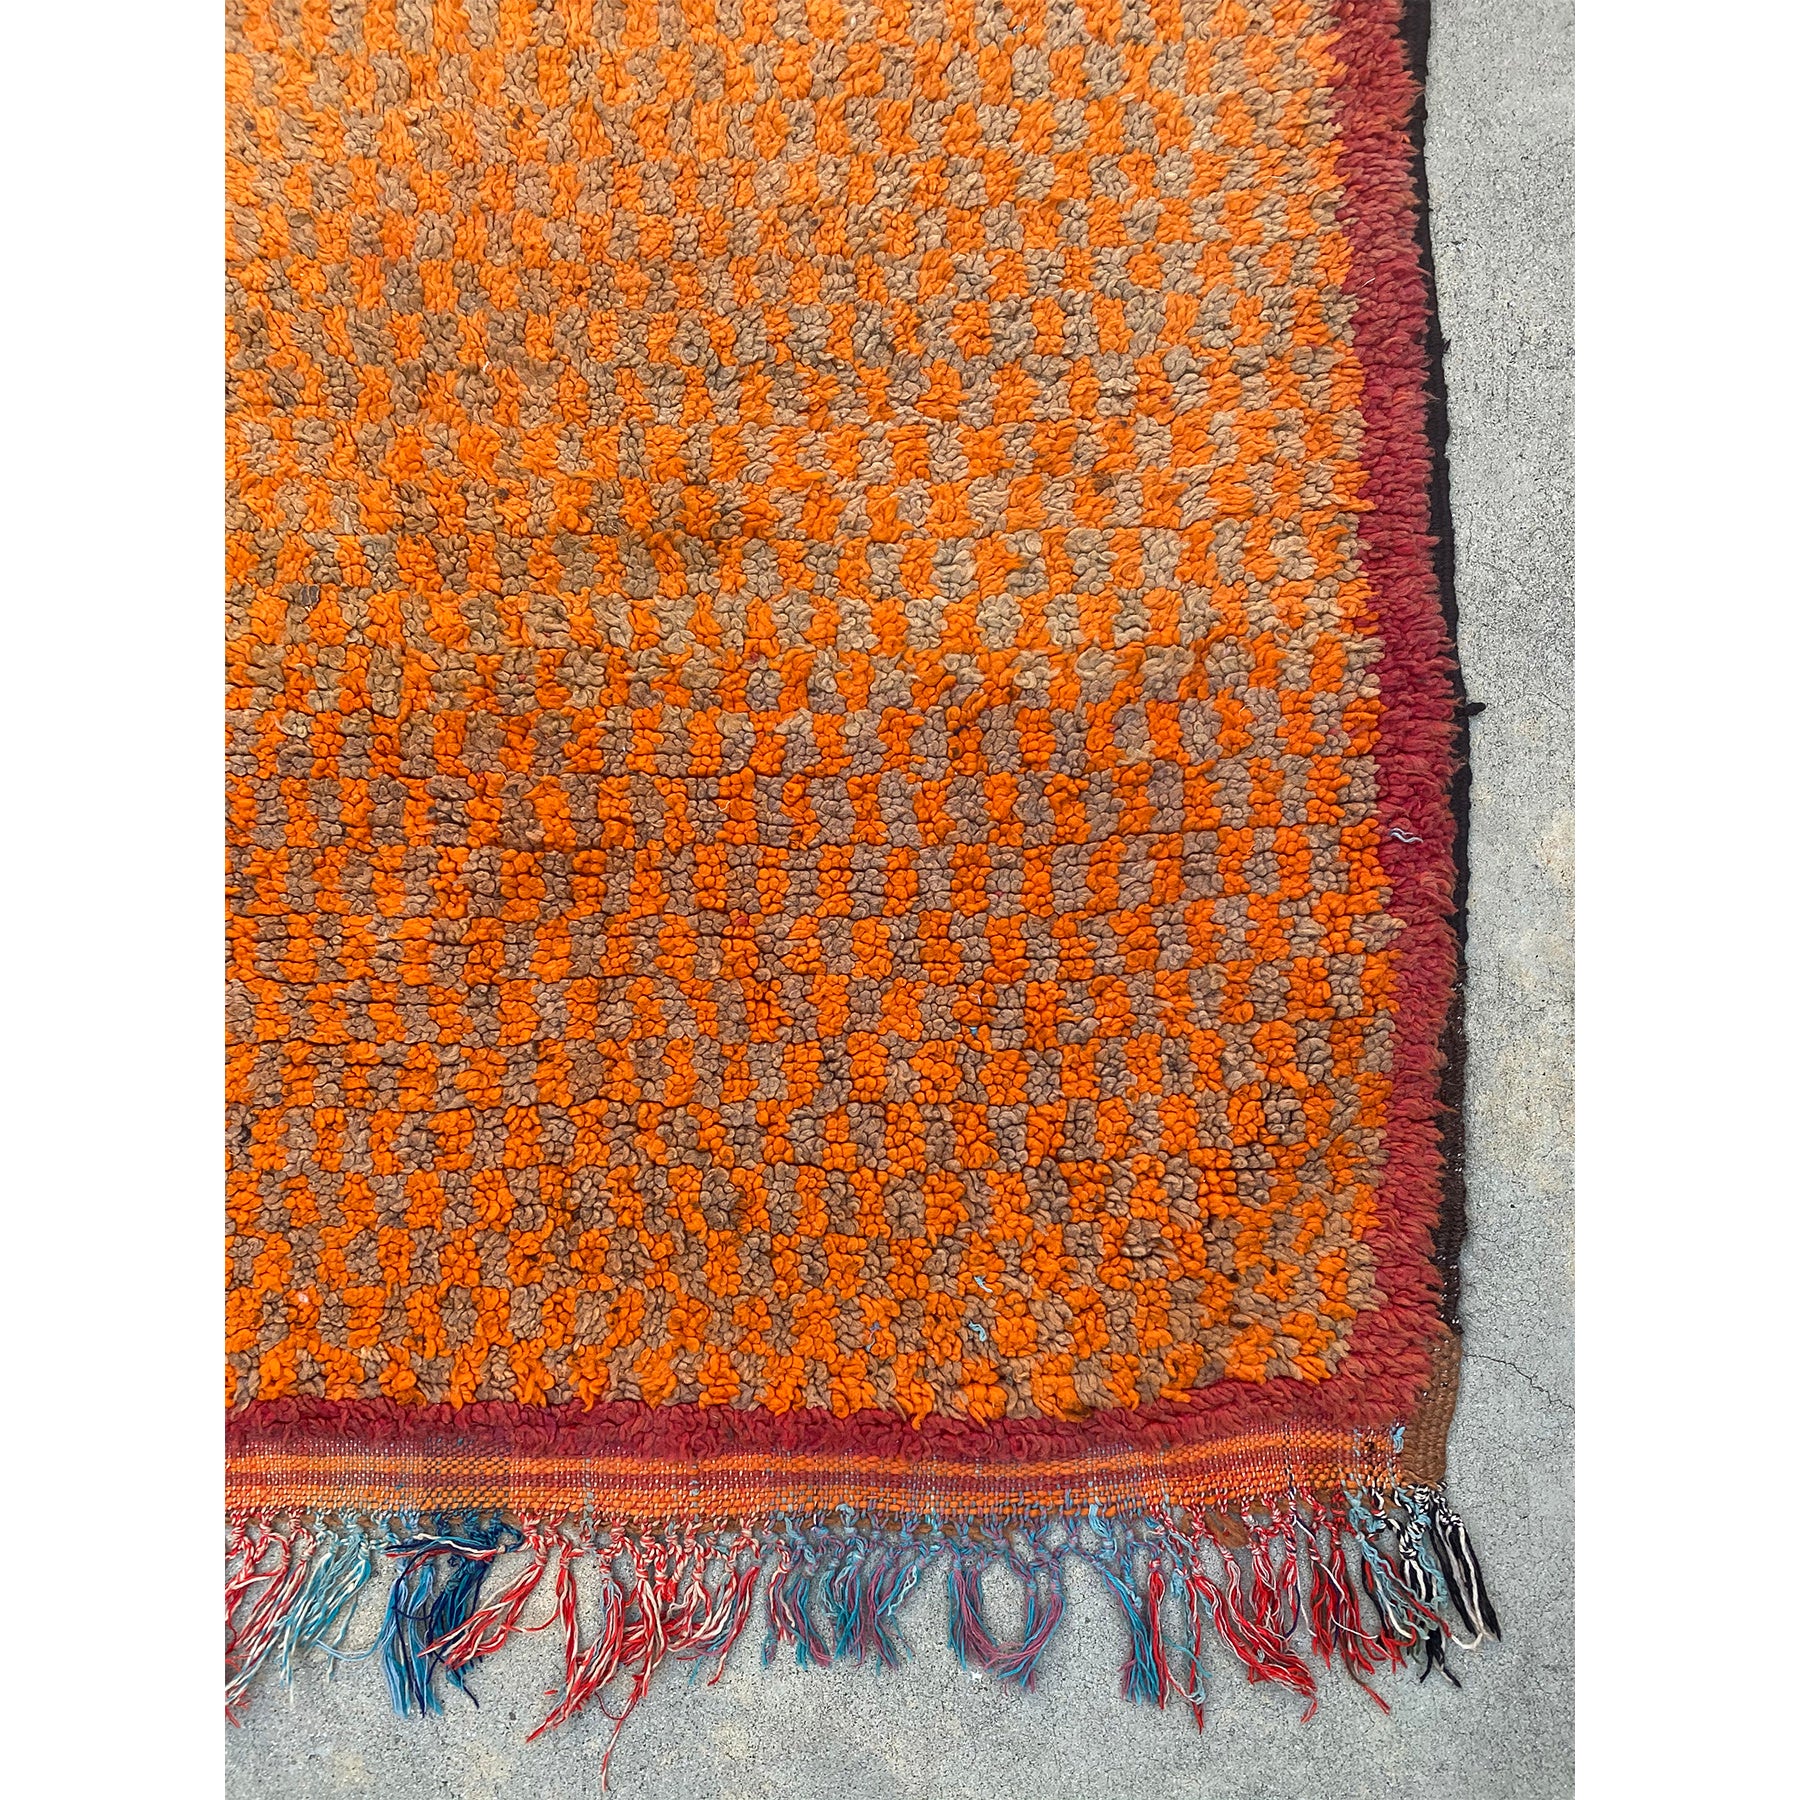 Medium sized orange Moroccan rug with red border - Kantara | Moroccan Rugs